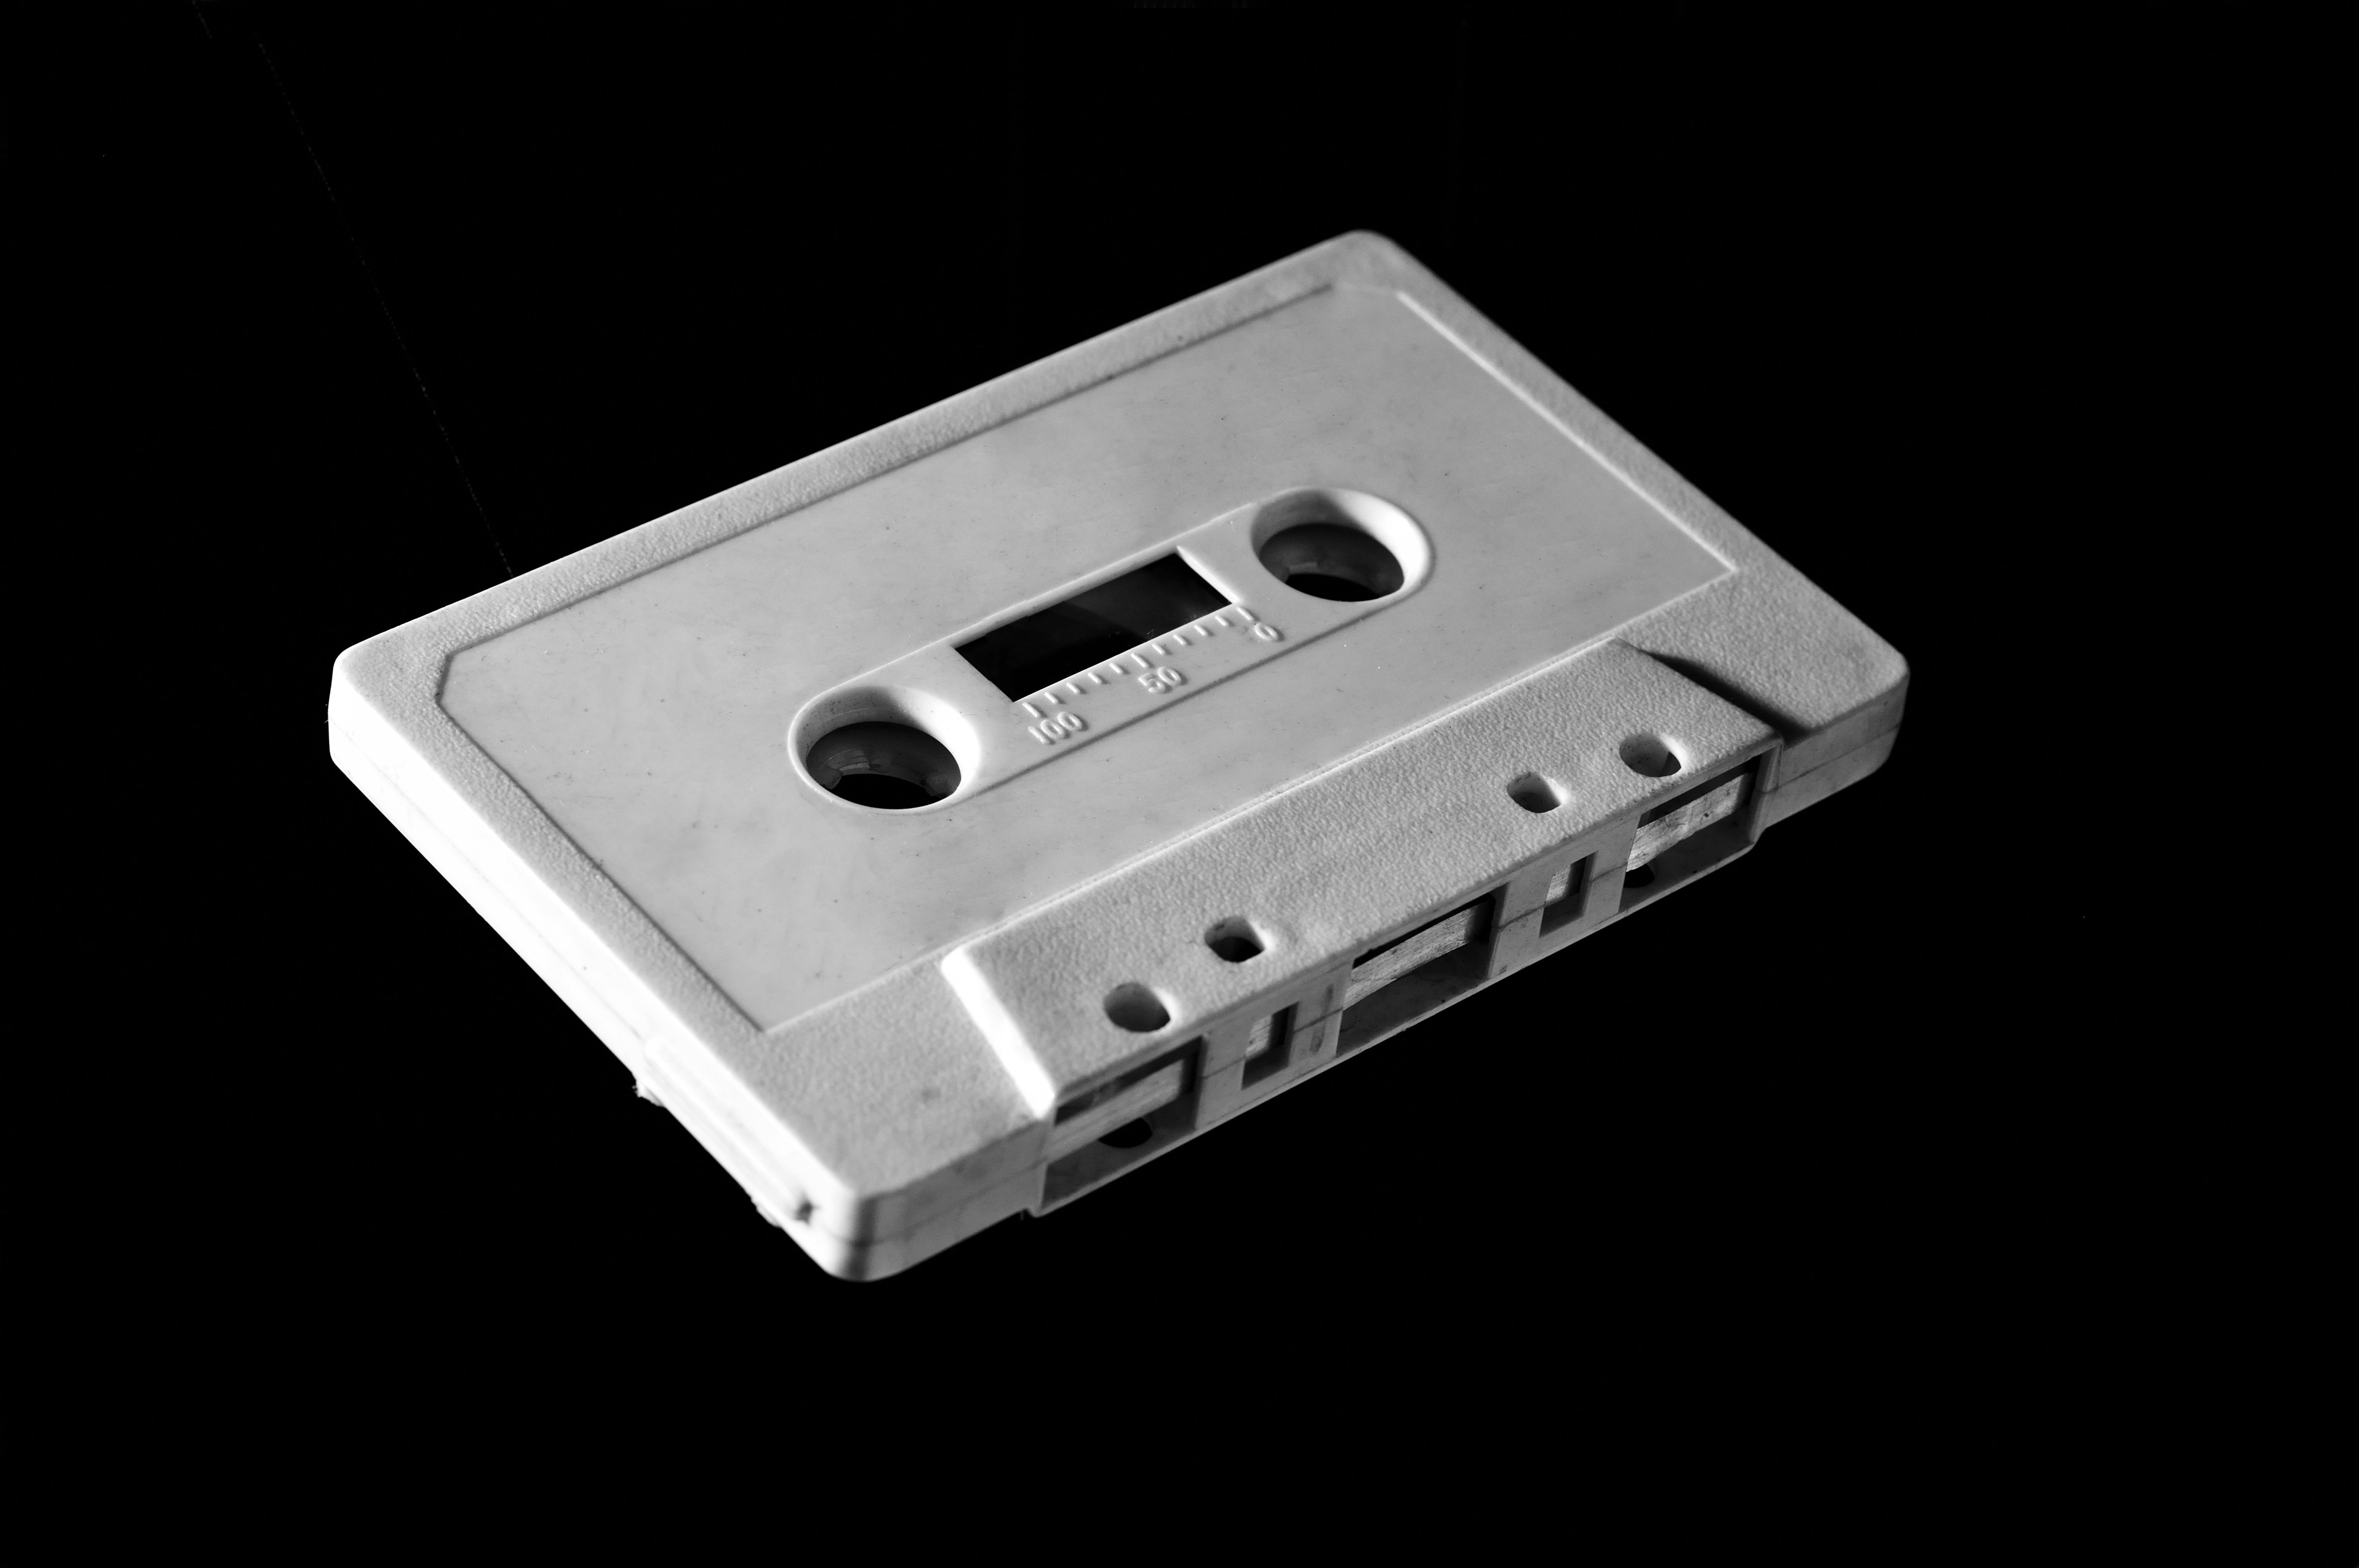 White Cassette Tape · Free Stock Photo